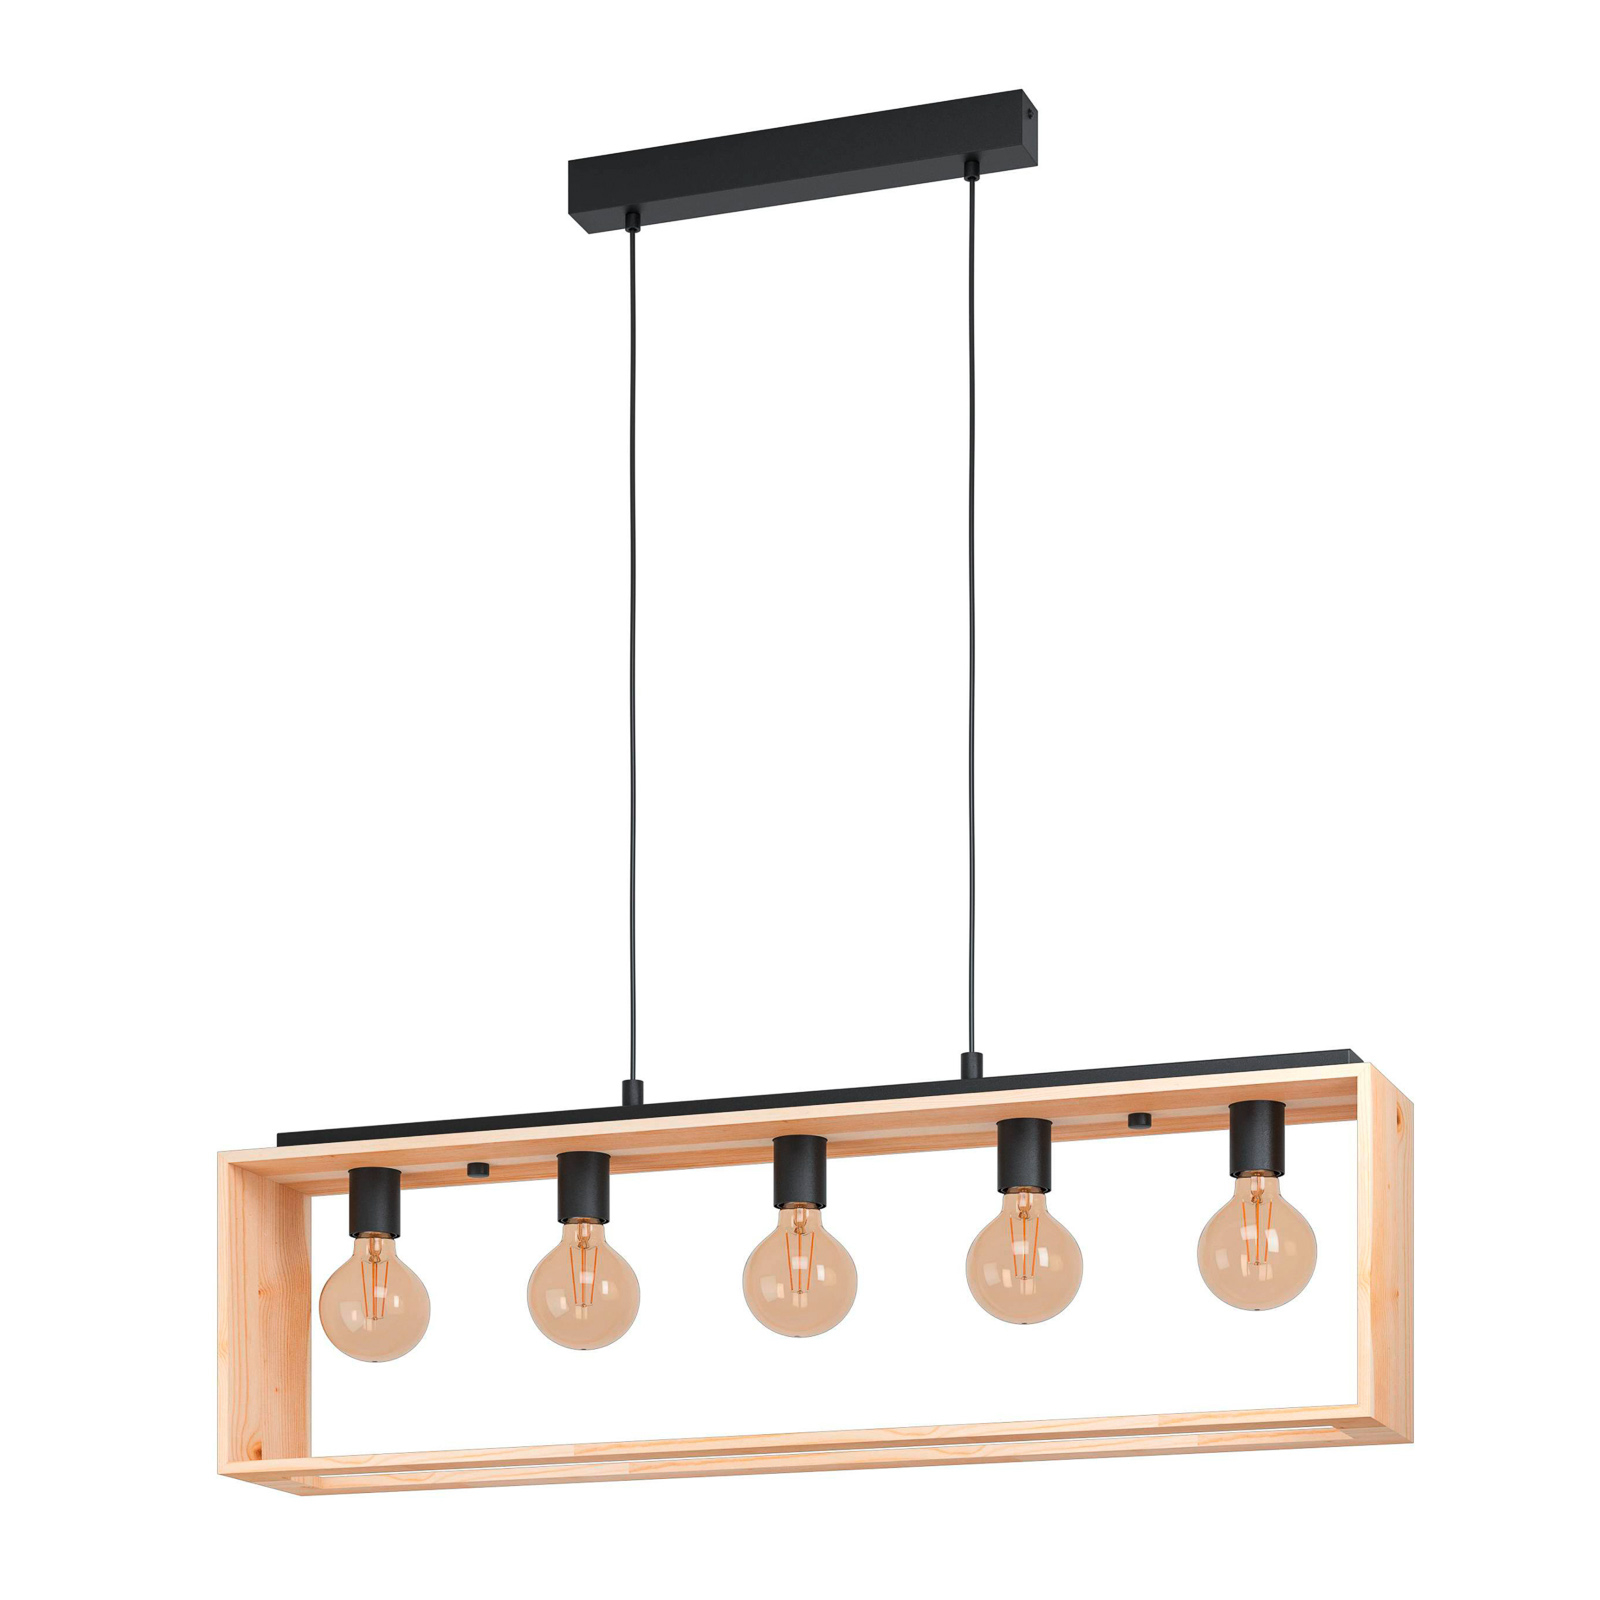 Famborough hanging lamp with wooden frame, 5-bulb